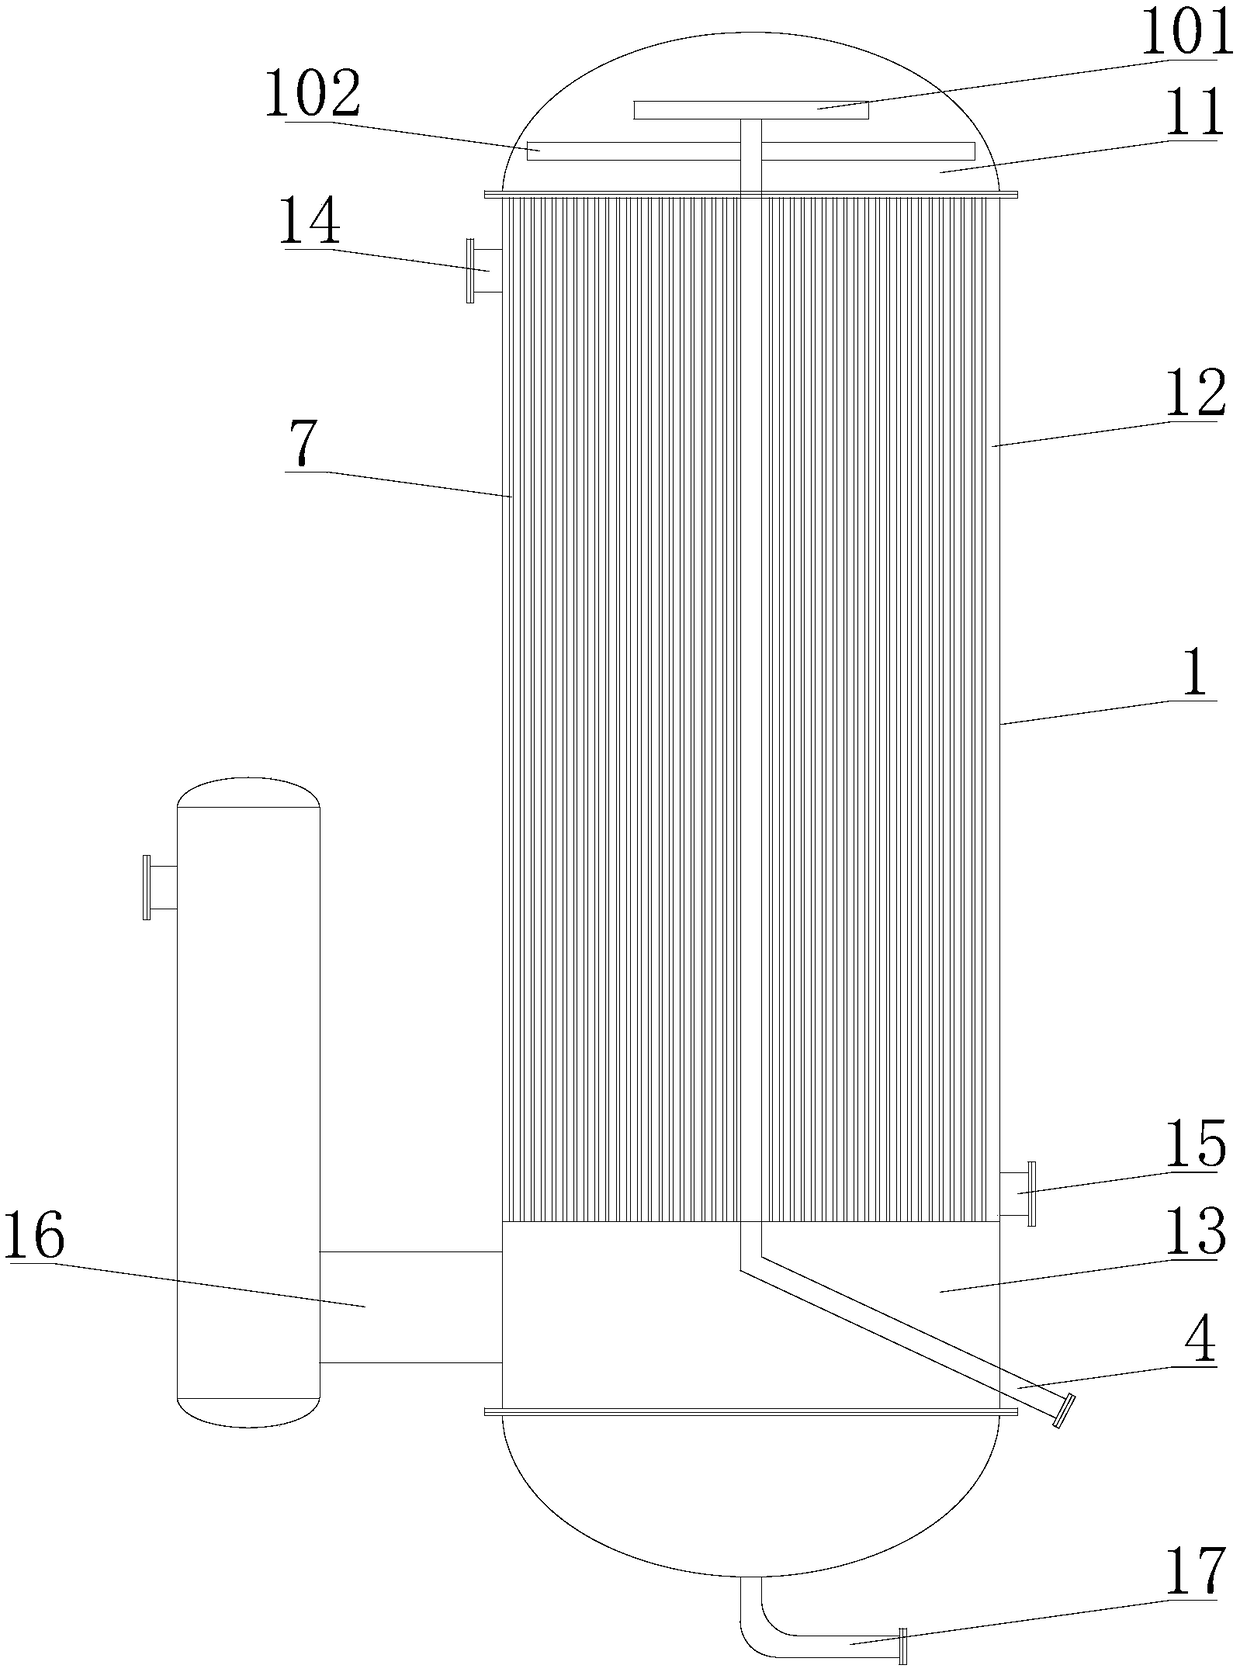 Membrane tube type falling film evaporator